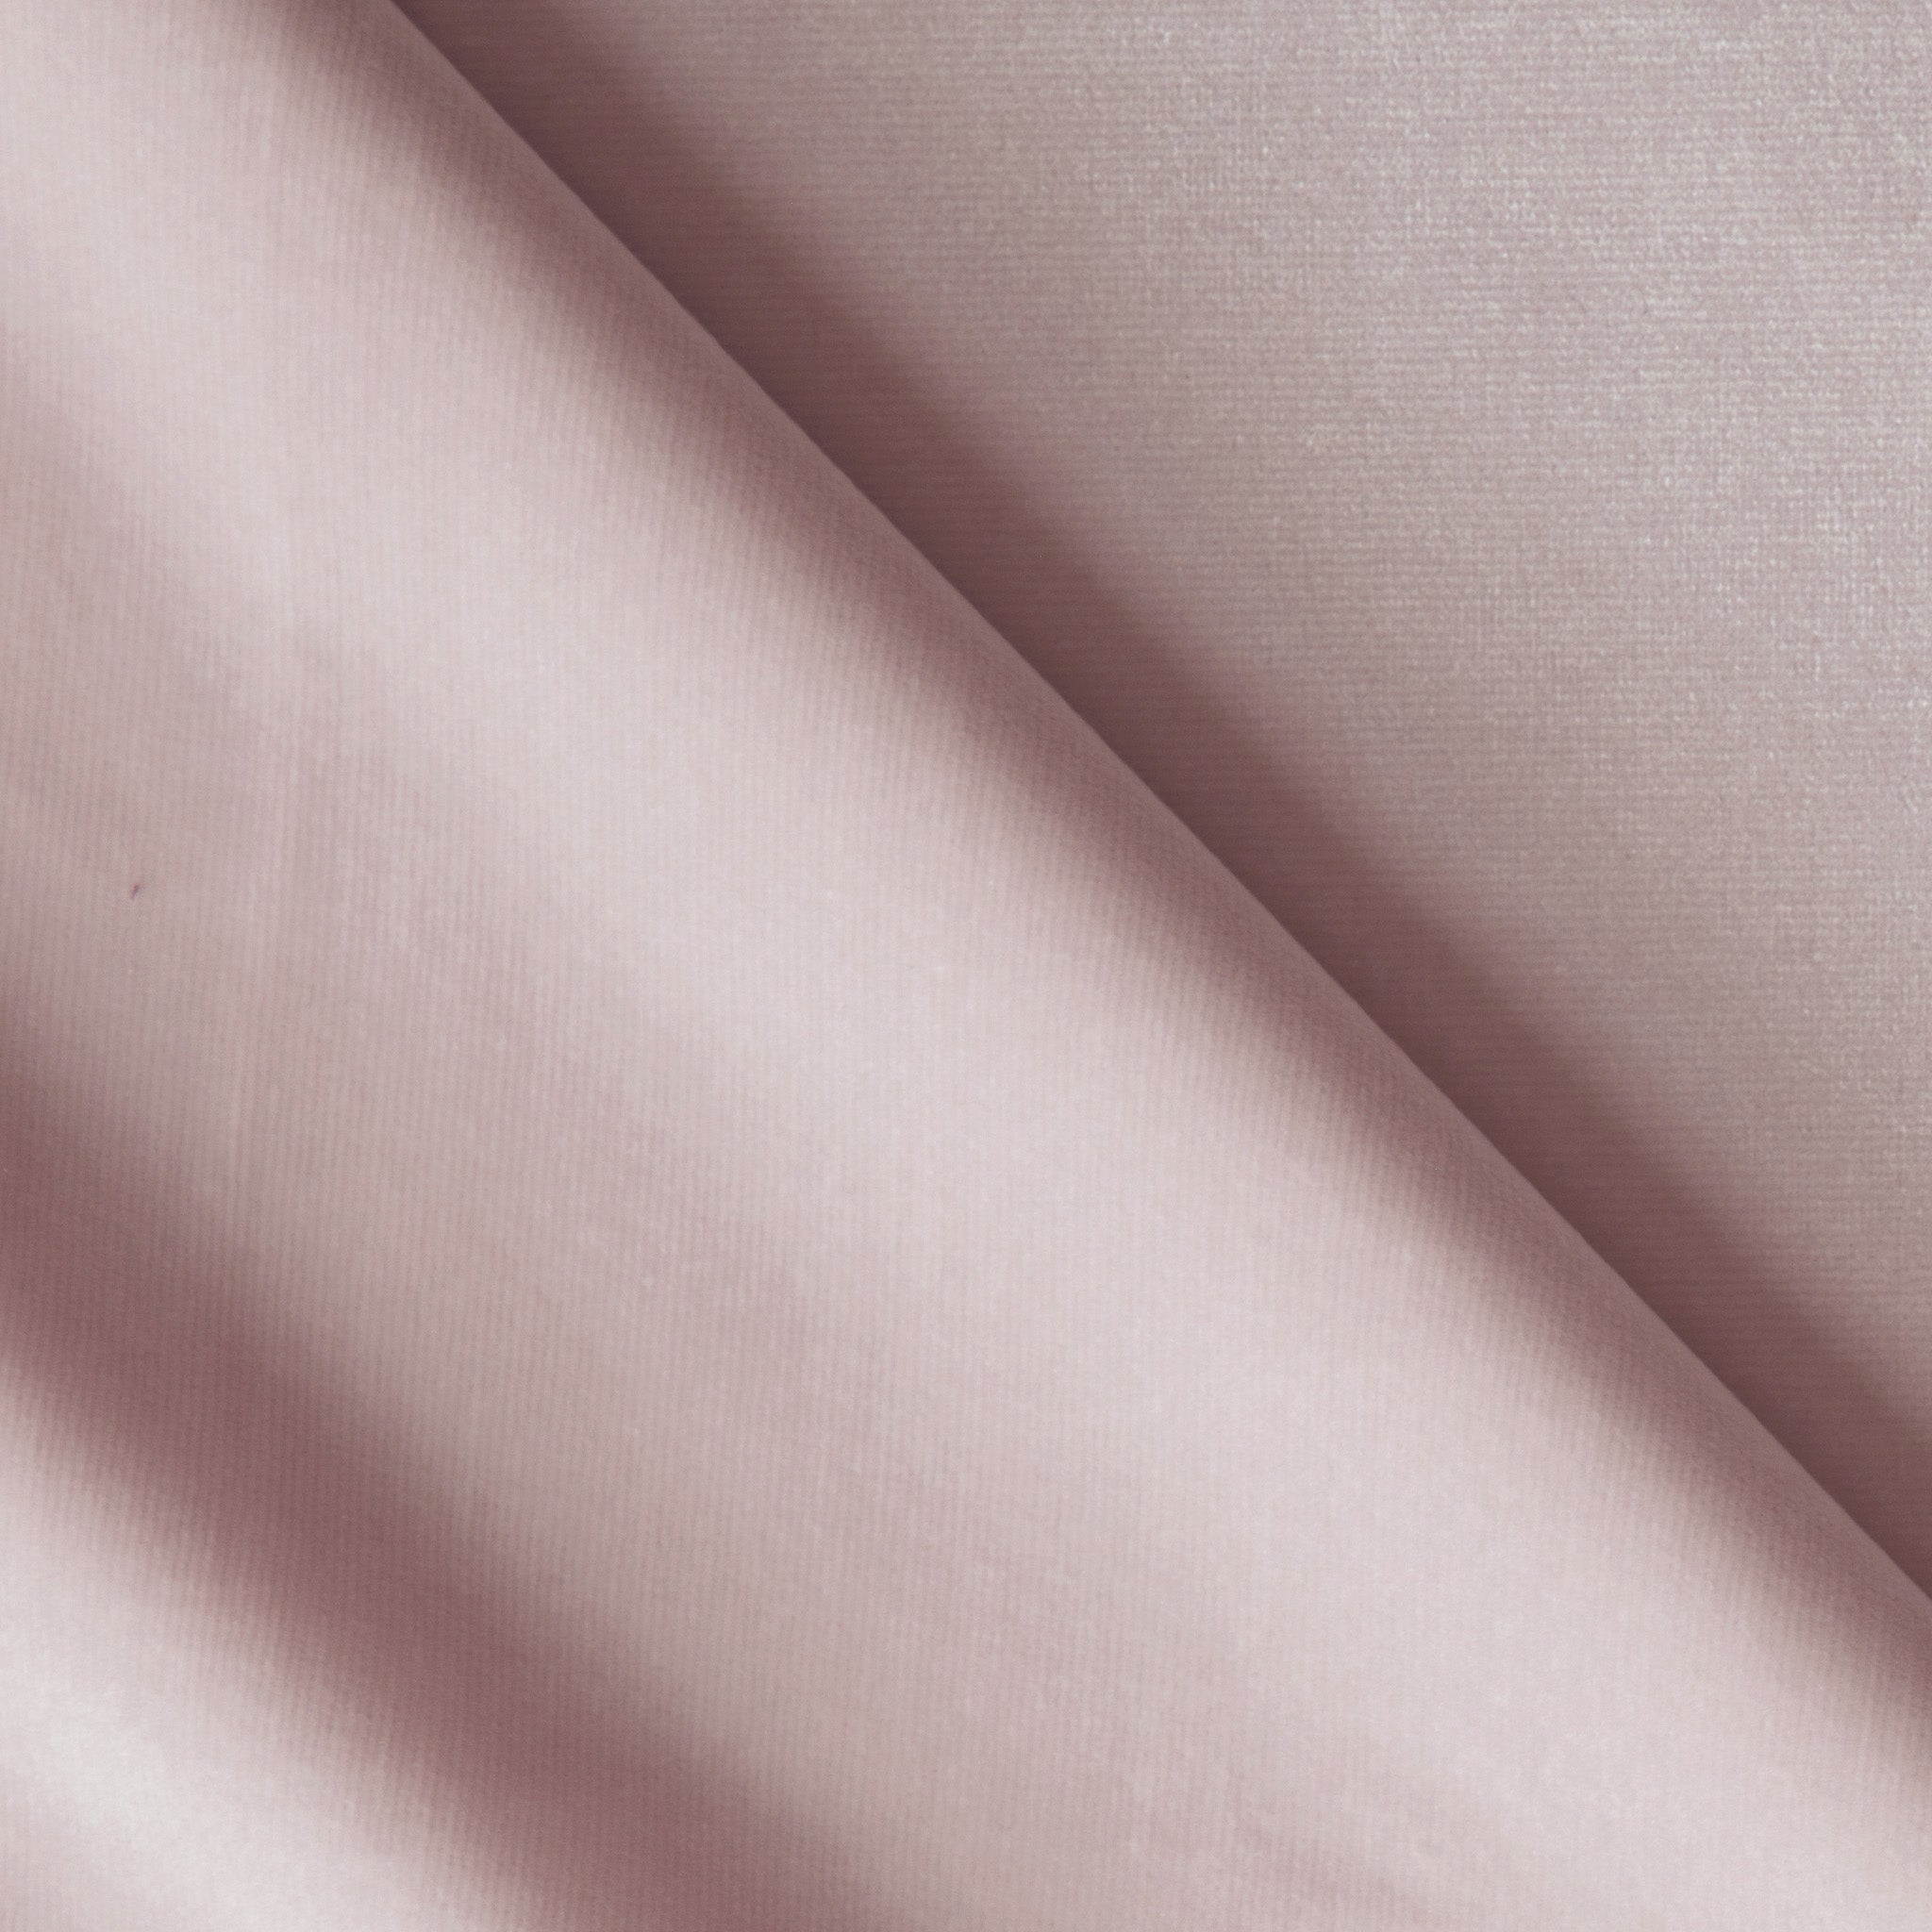 Pink Velvet Fabric Close-Up